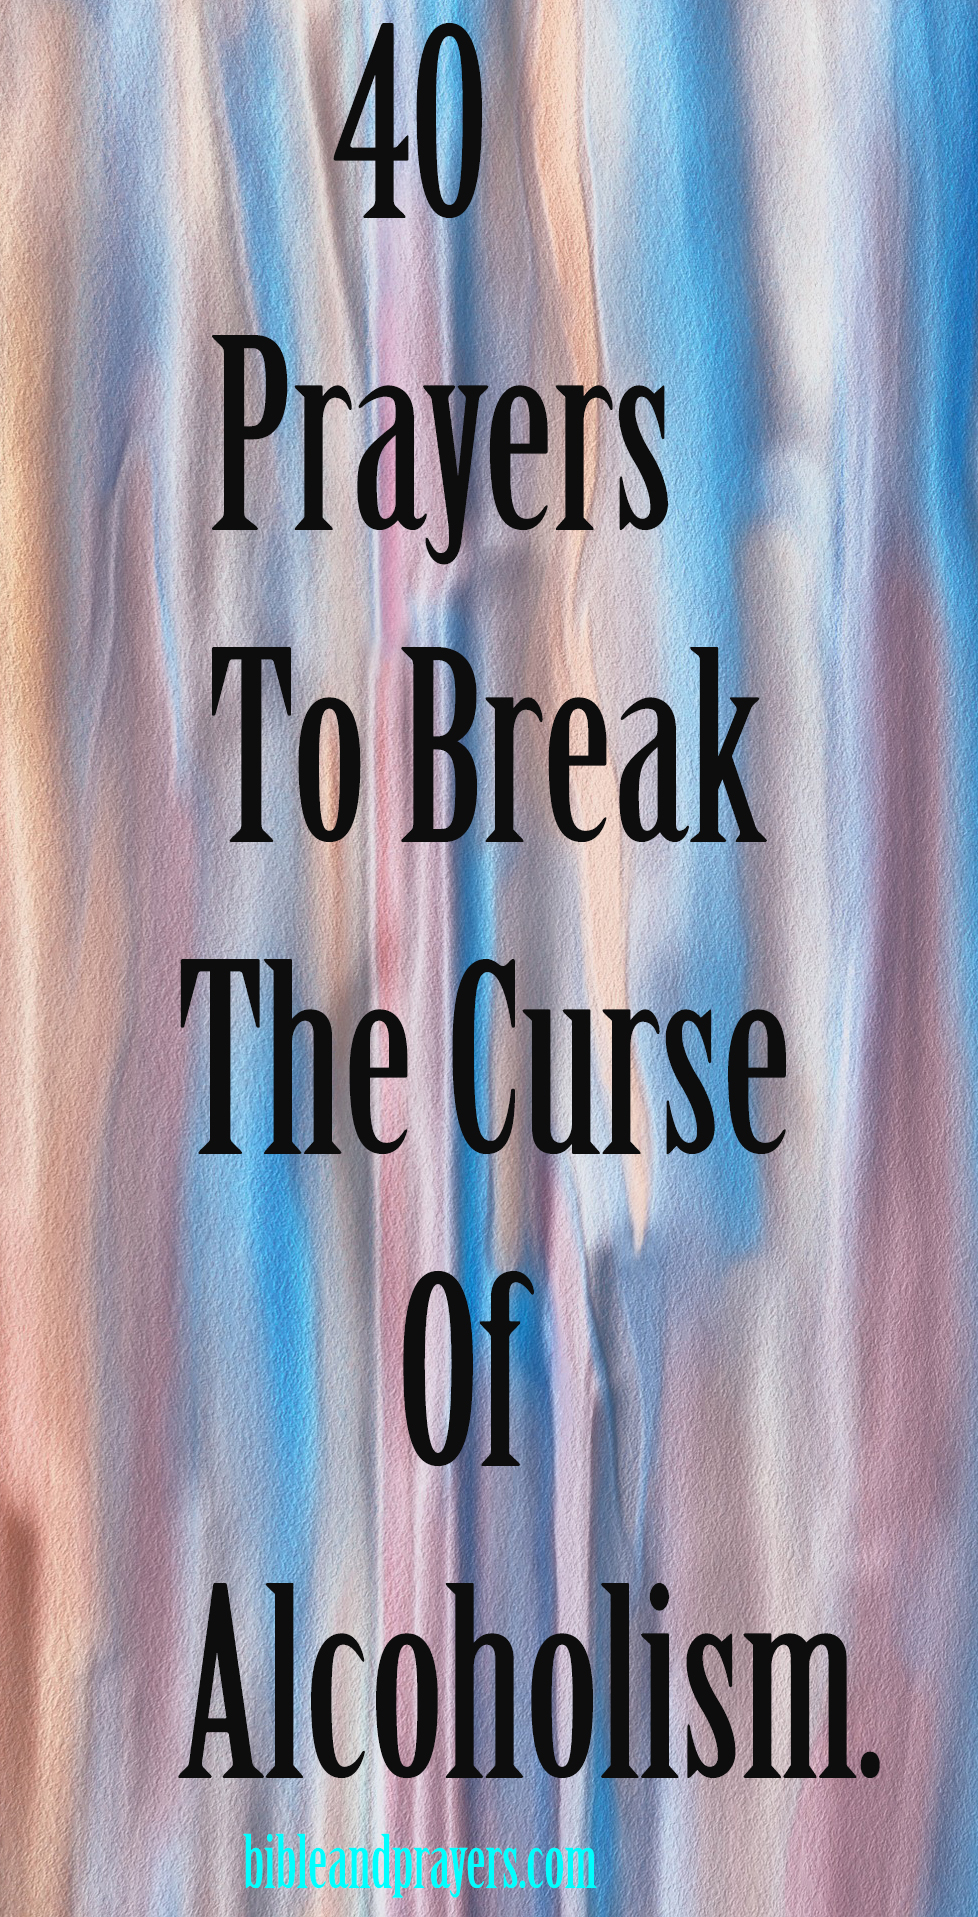 40 Prayers To Break The Curse Of Alcoholism.